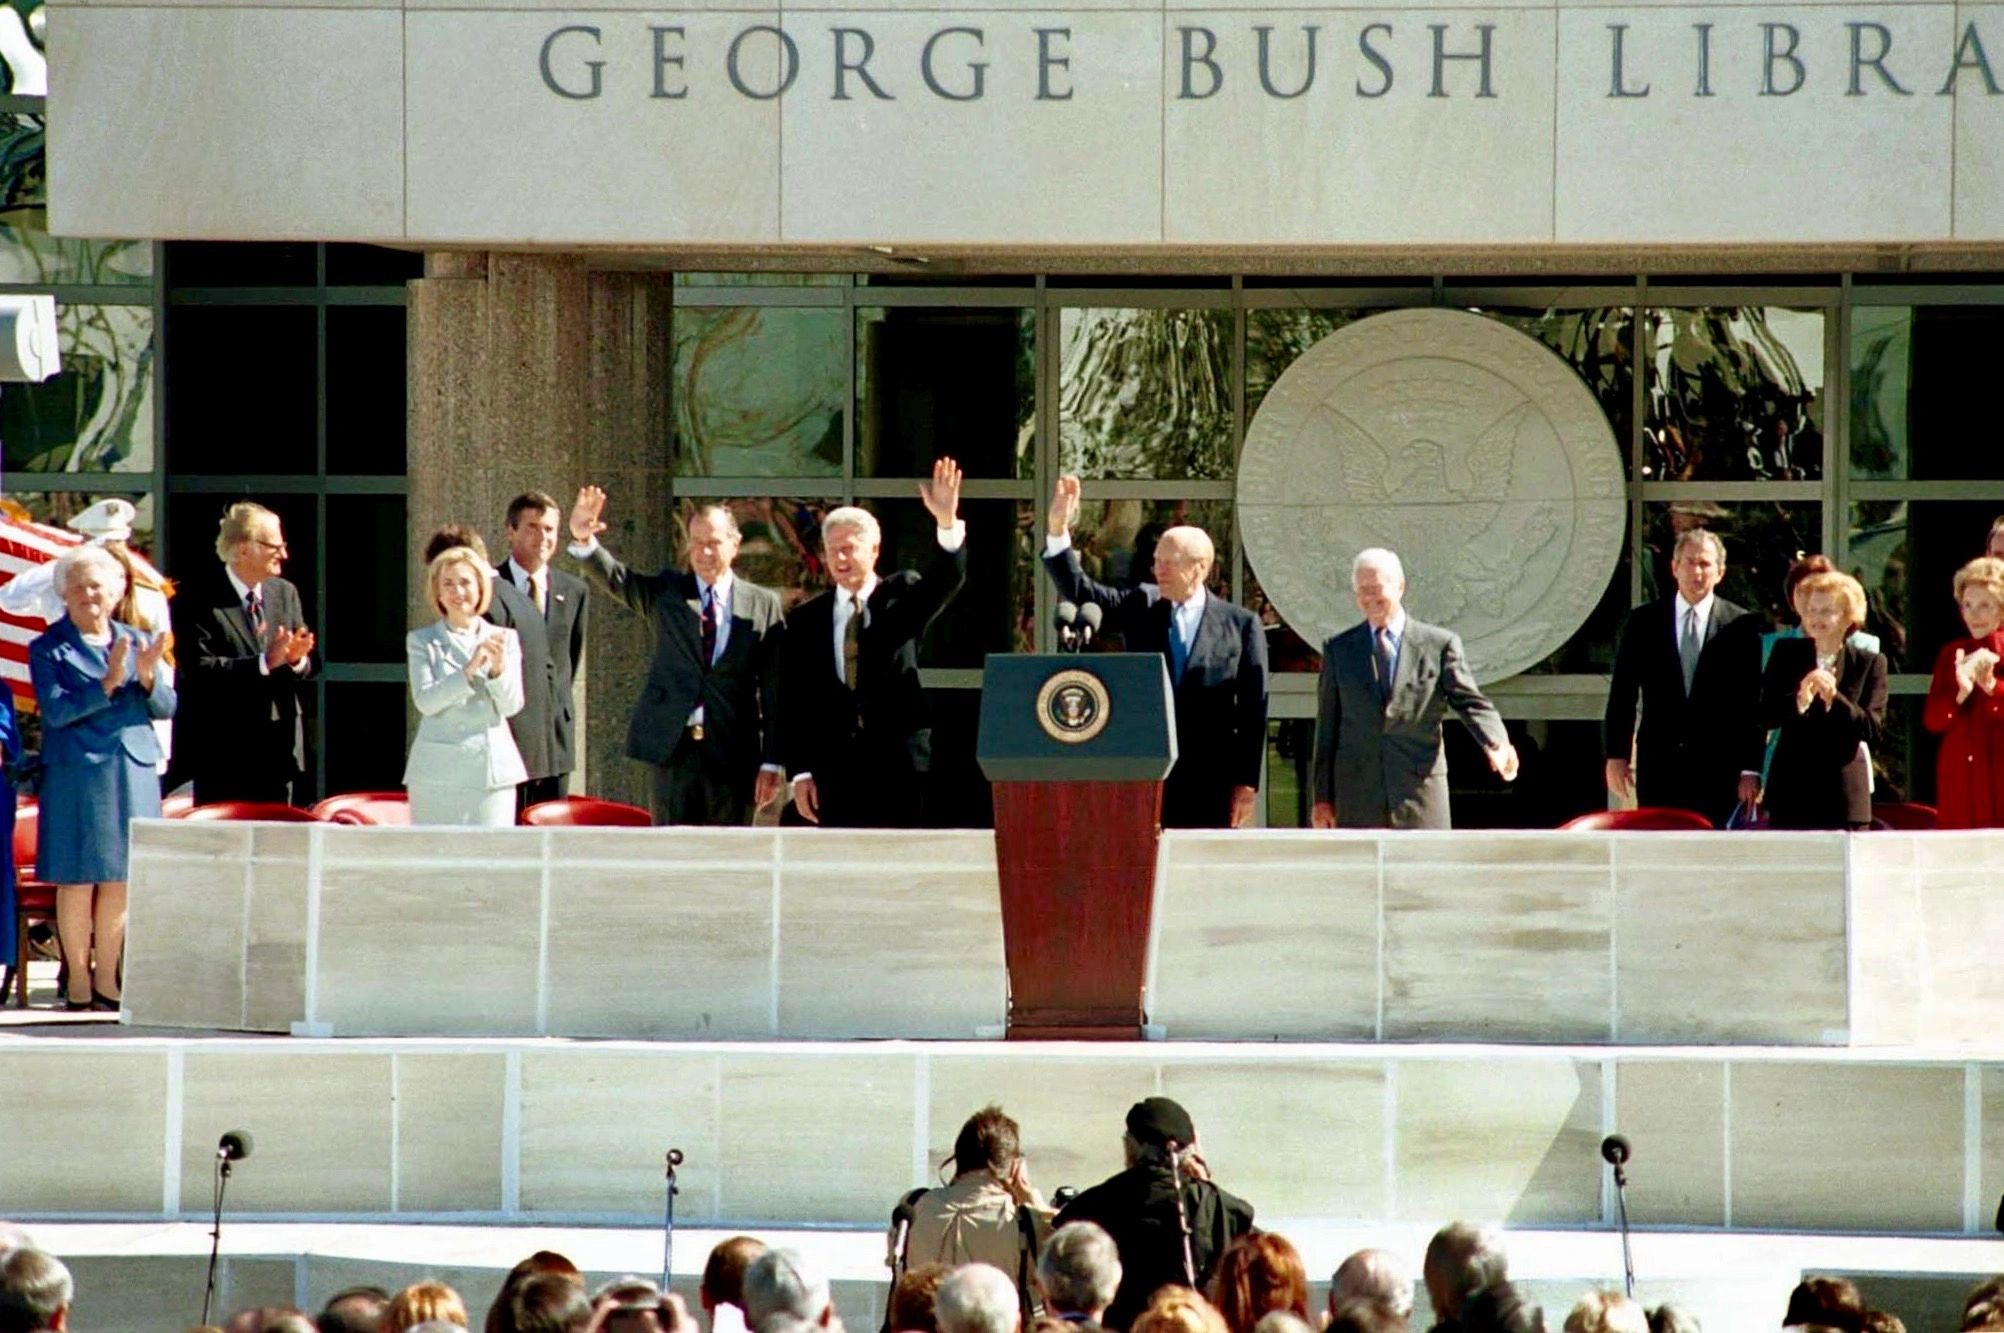 Farris Rookstool, III, George H. W. Bush Presidential Library, Photo by Michael Mulvey, DMN ©1997